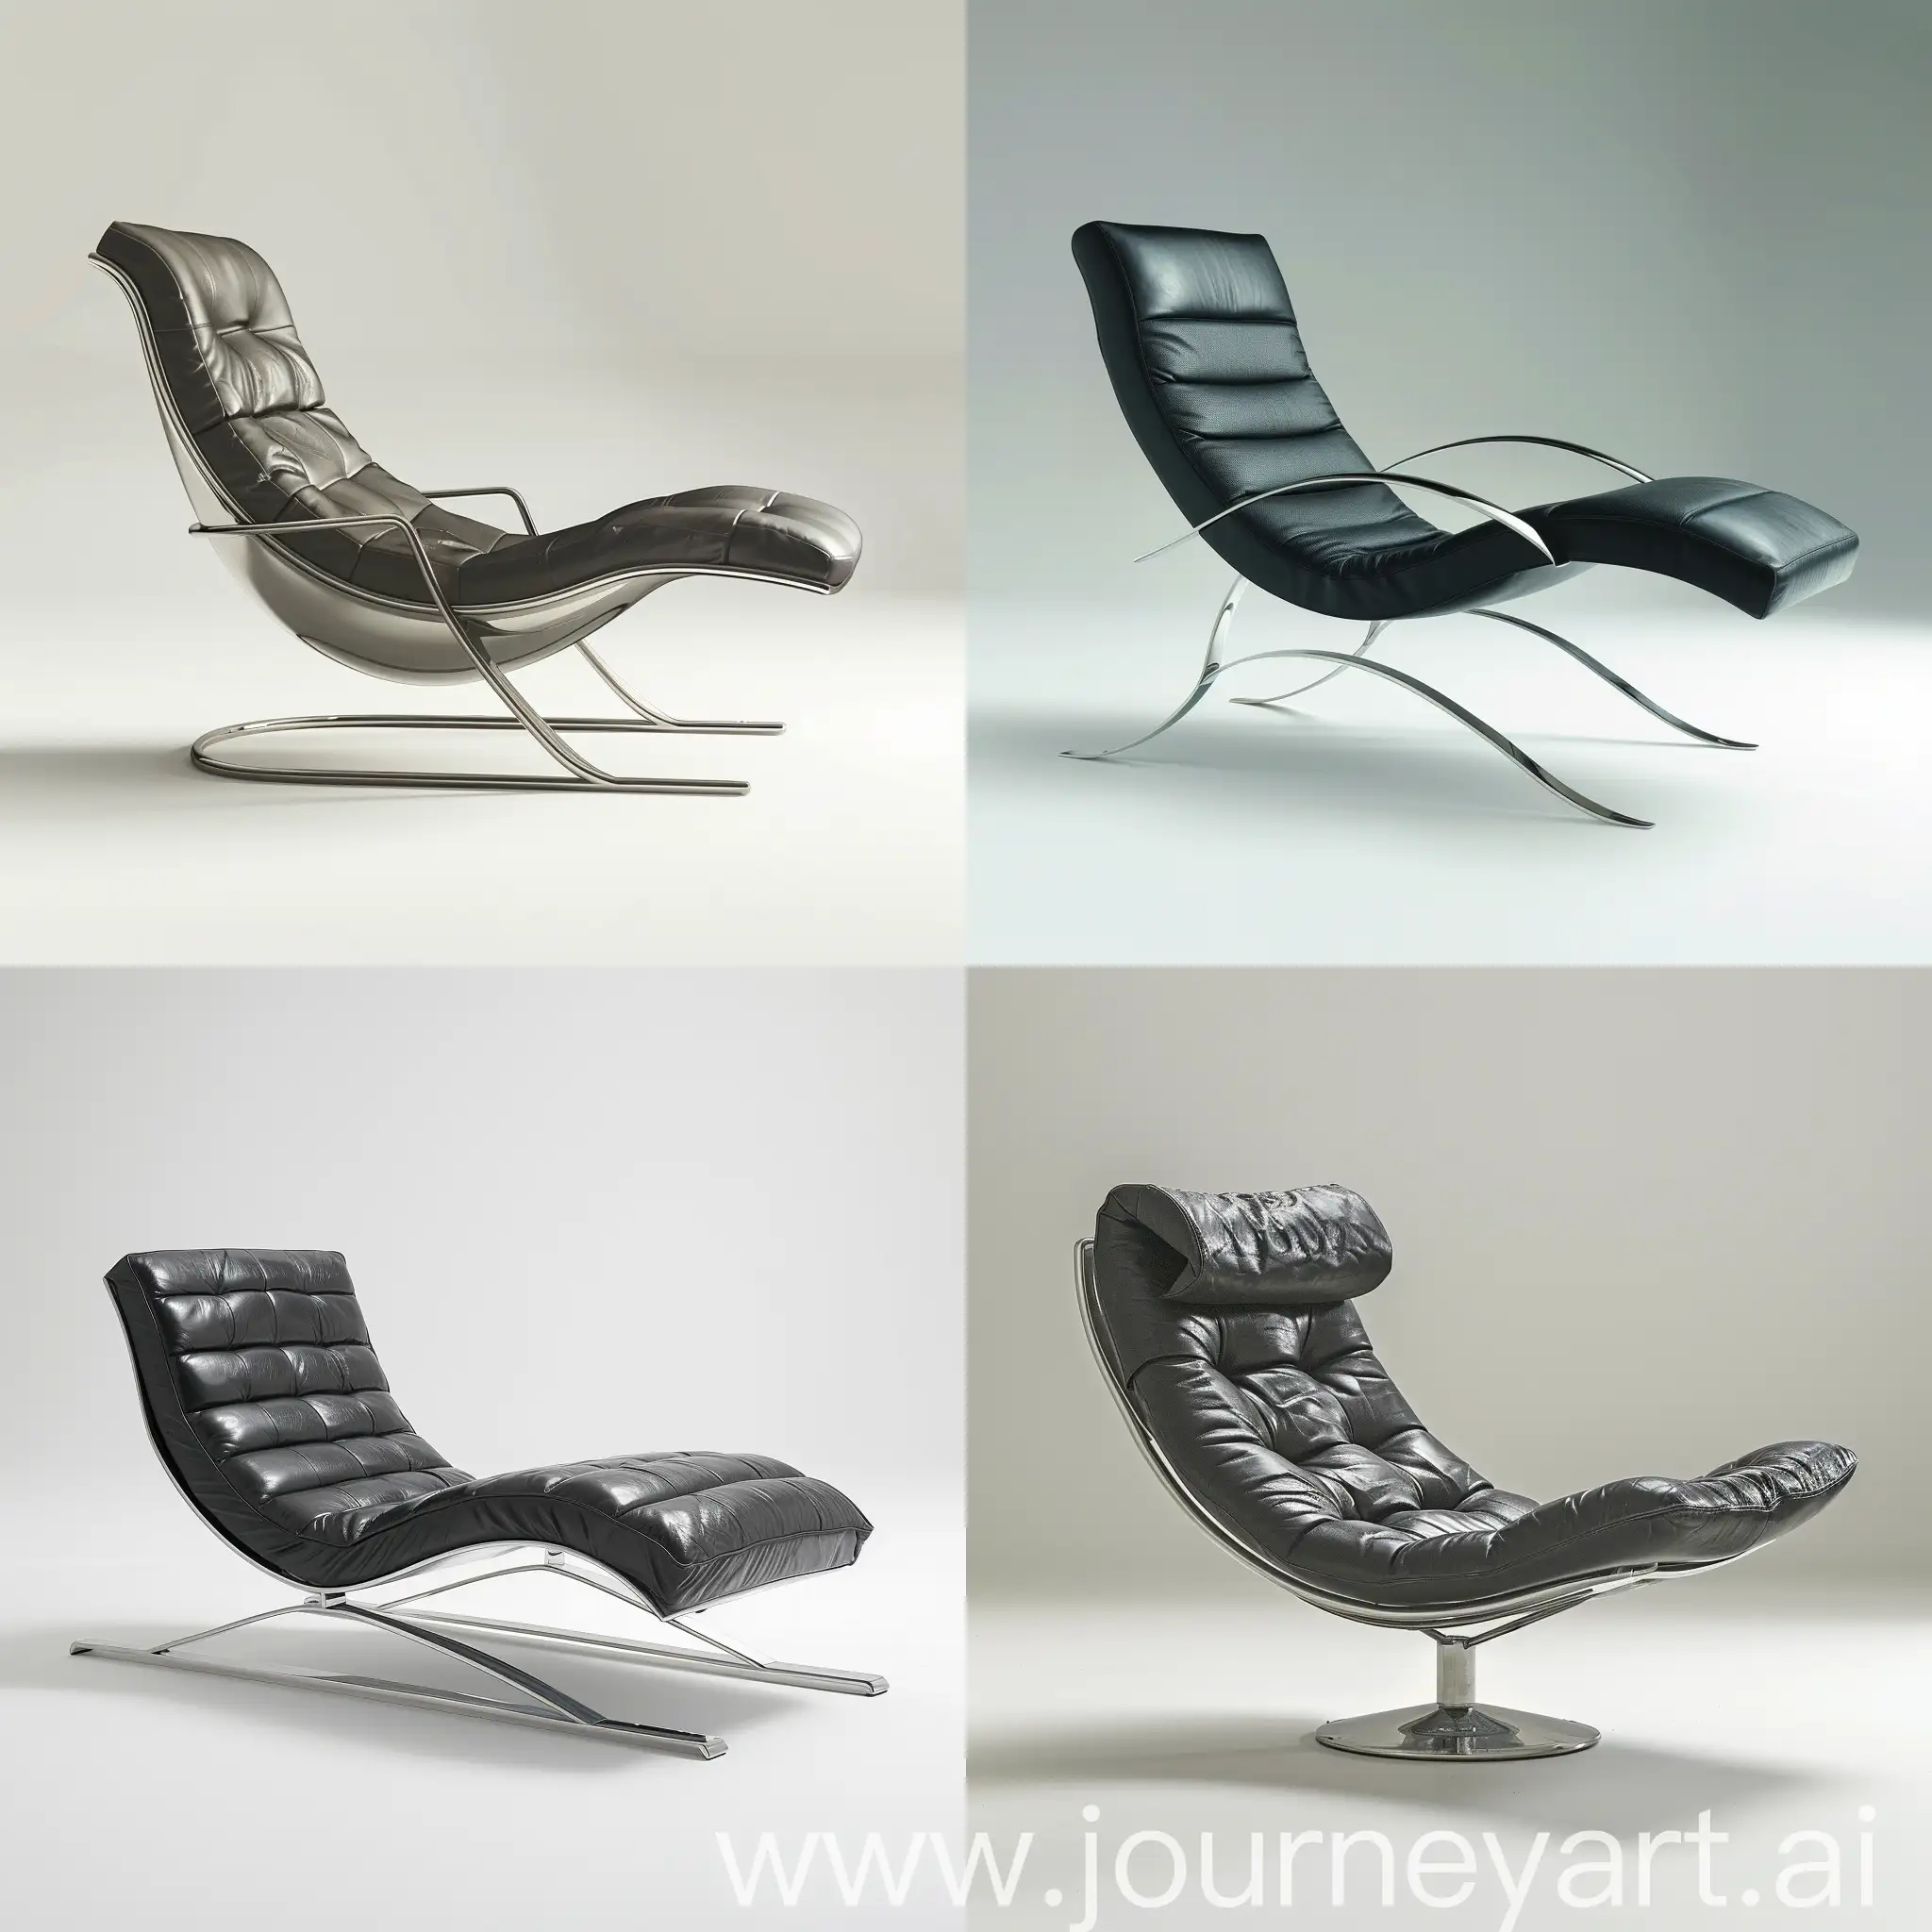 Modern-Black-Leather-Lounge-Chair-on-White-Background-Stylish-and-Minimalist-Furniture-Photo